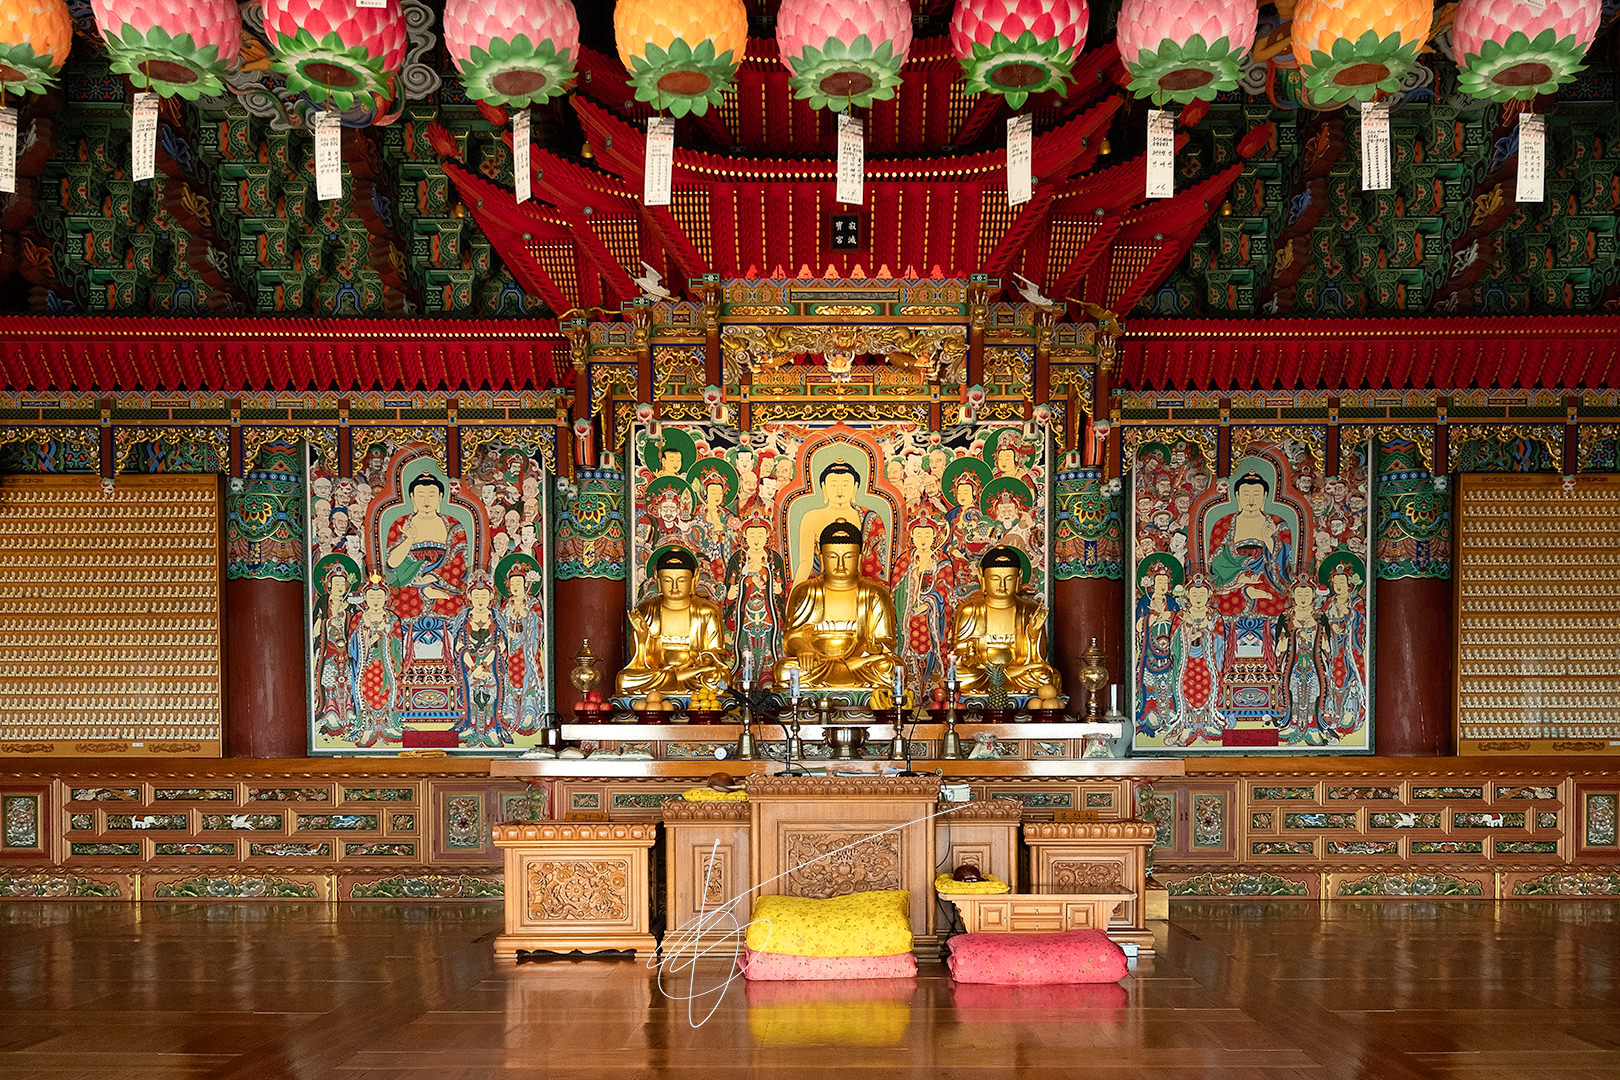 Art inside the coastline Buddhist temple of Busan